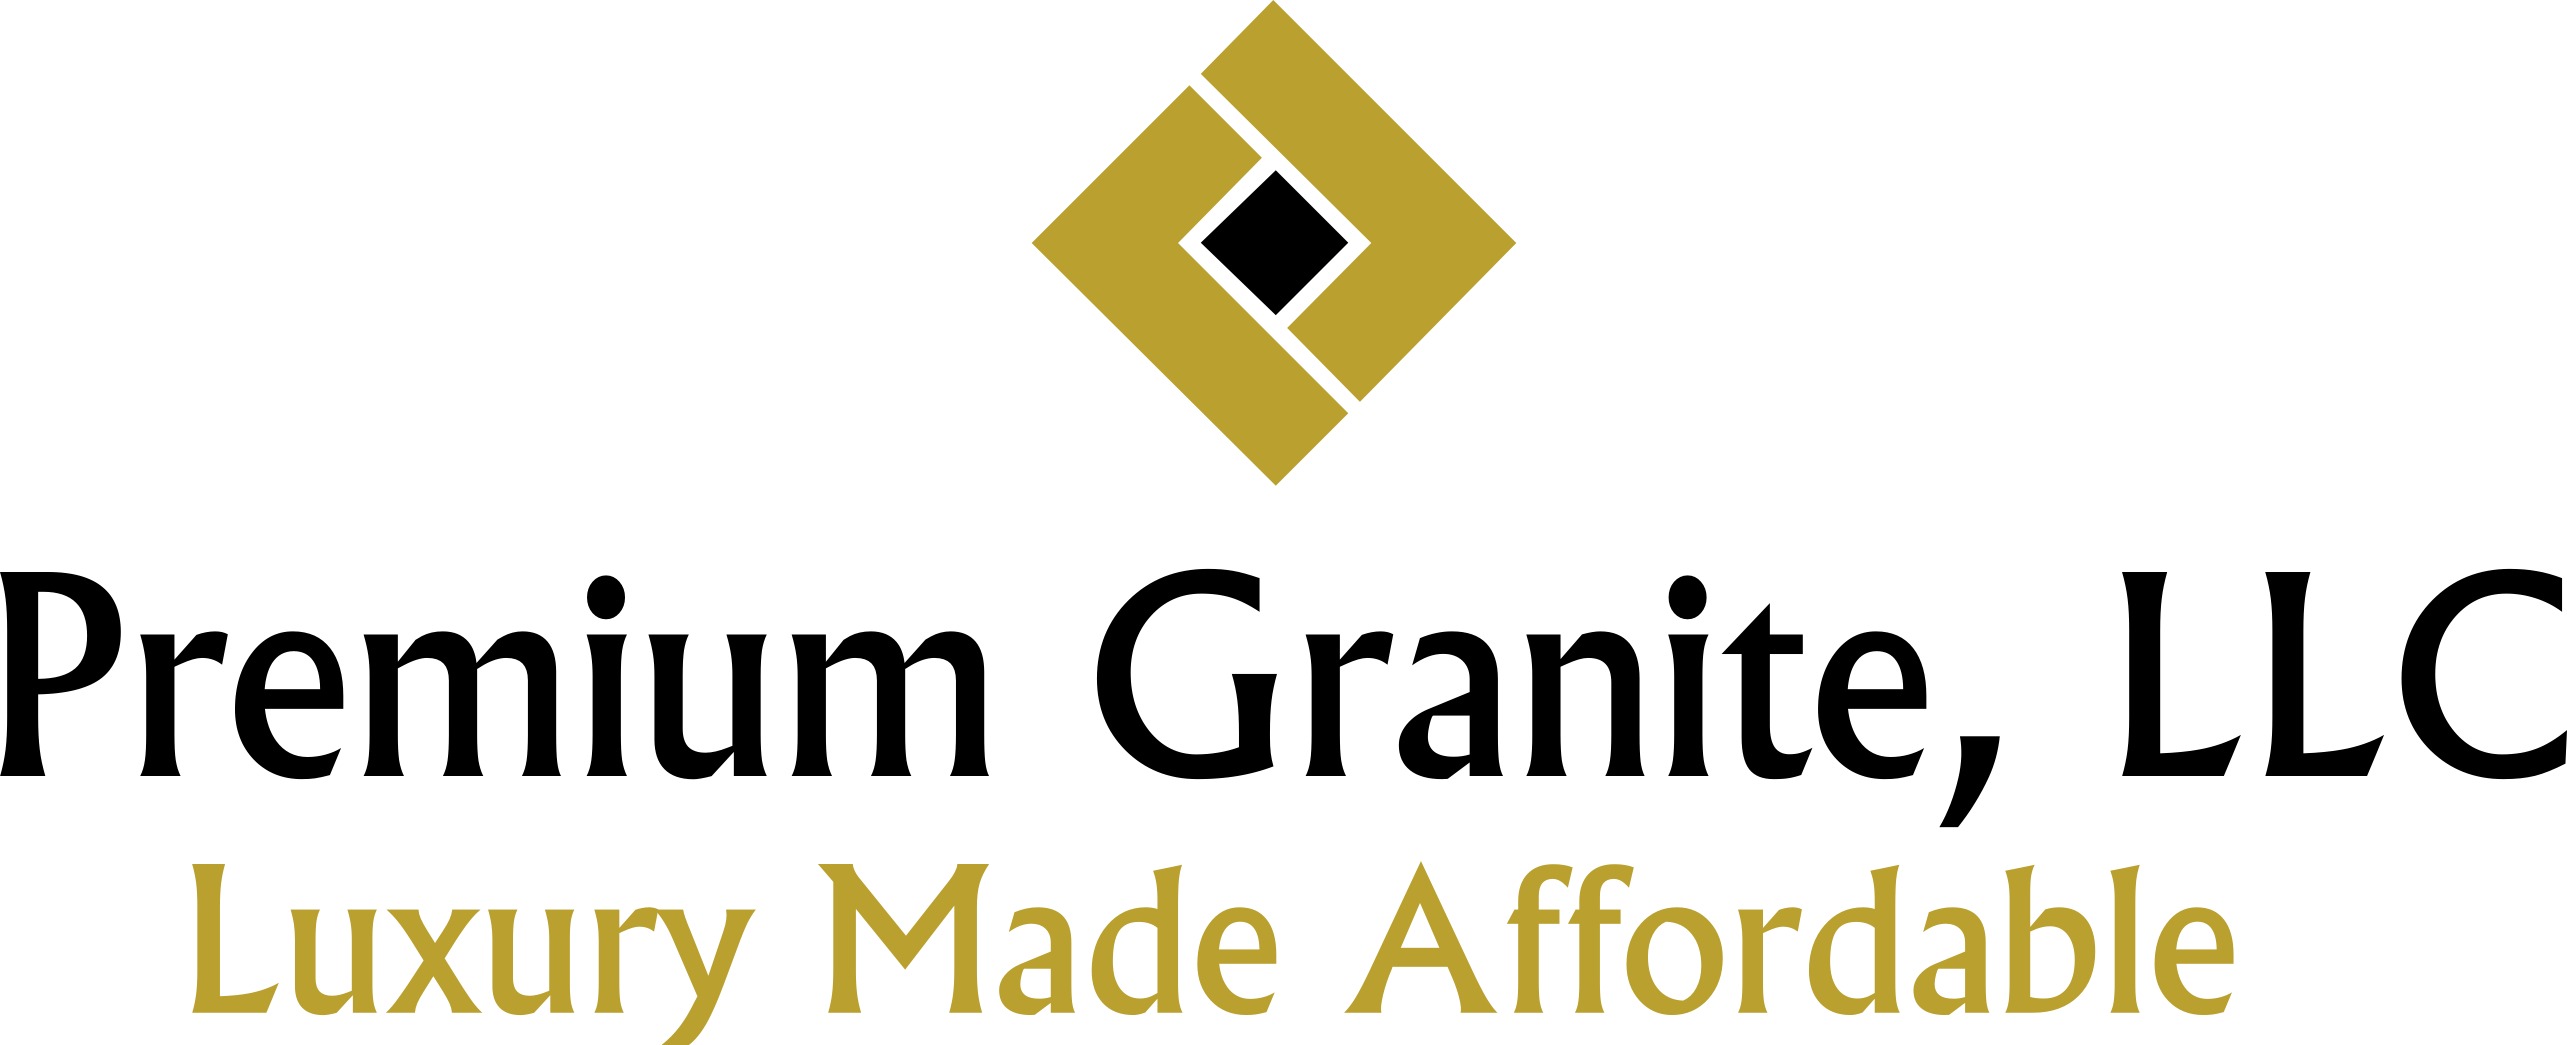 Premium Granite, LLC Highlights Reasons Why Granite is the Most Popular Countertop